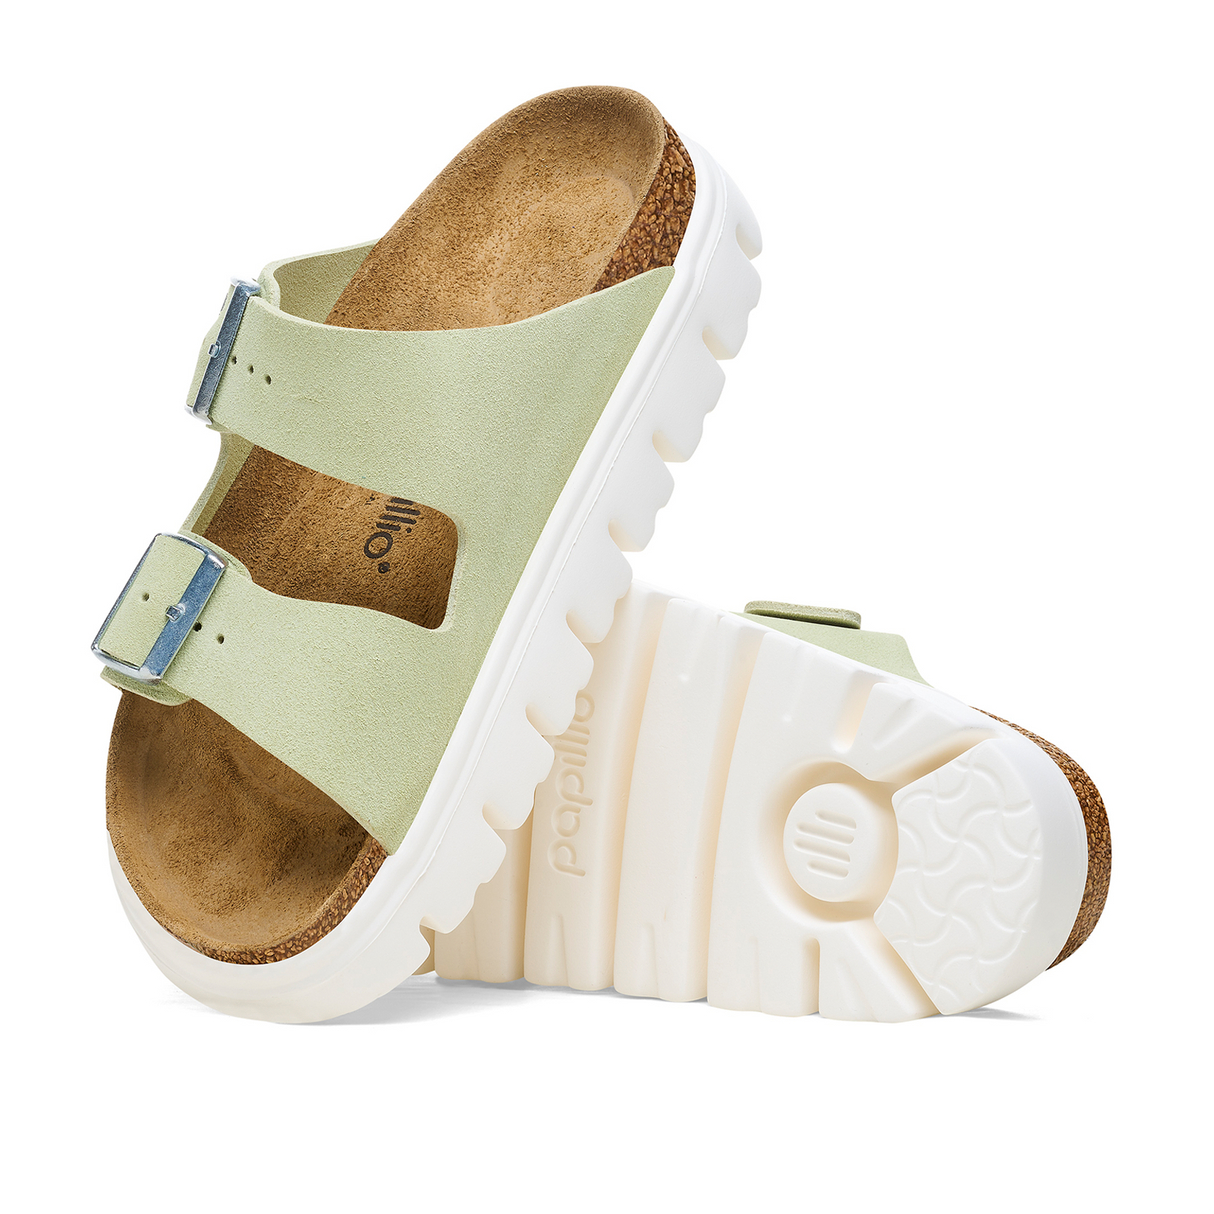 Birkenstock Arizona Chunky Sandal (Women) - Faded Lime Suede Sandals - Slide - The Heel Shoe Fitters